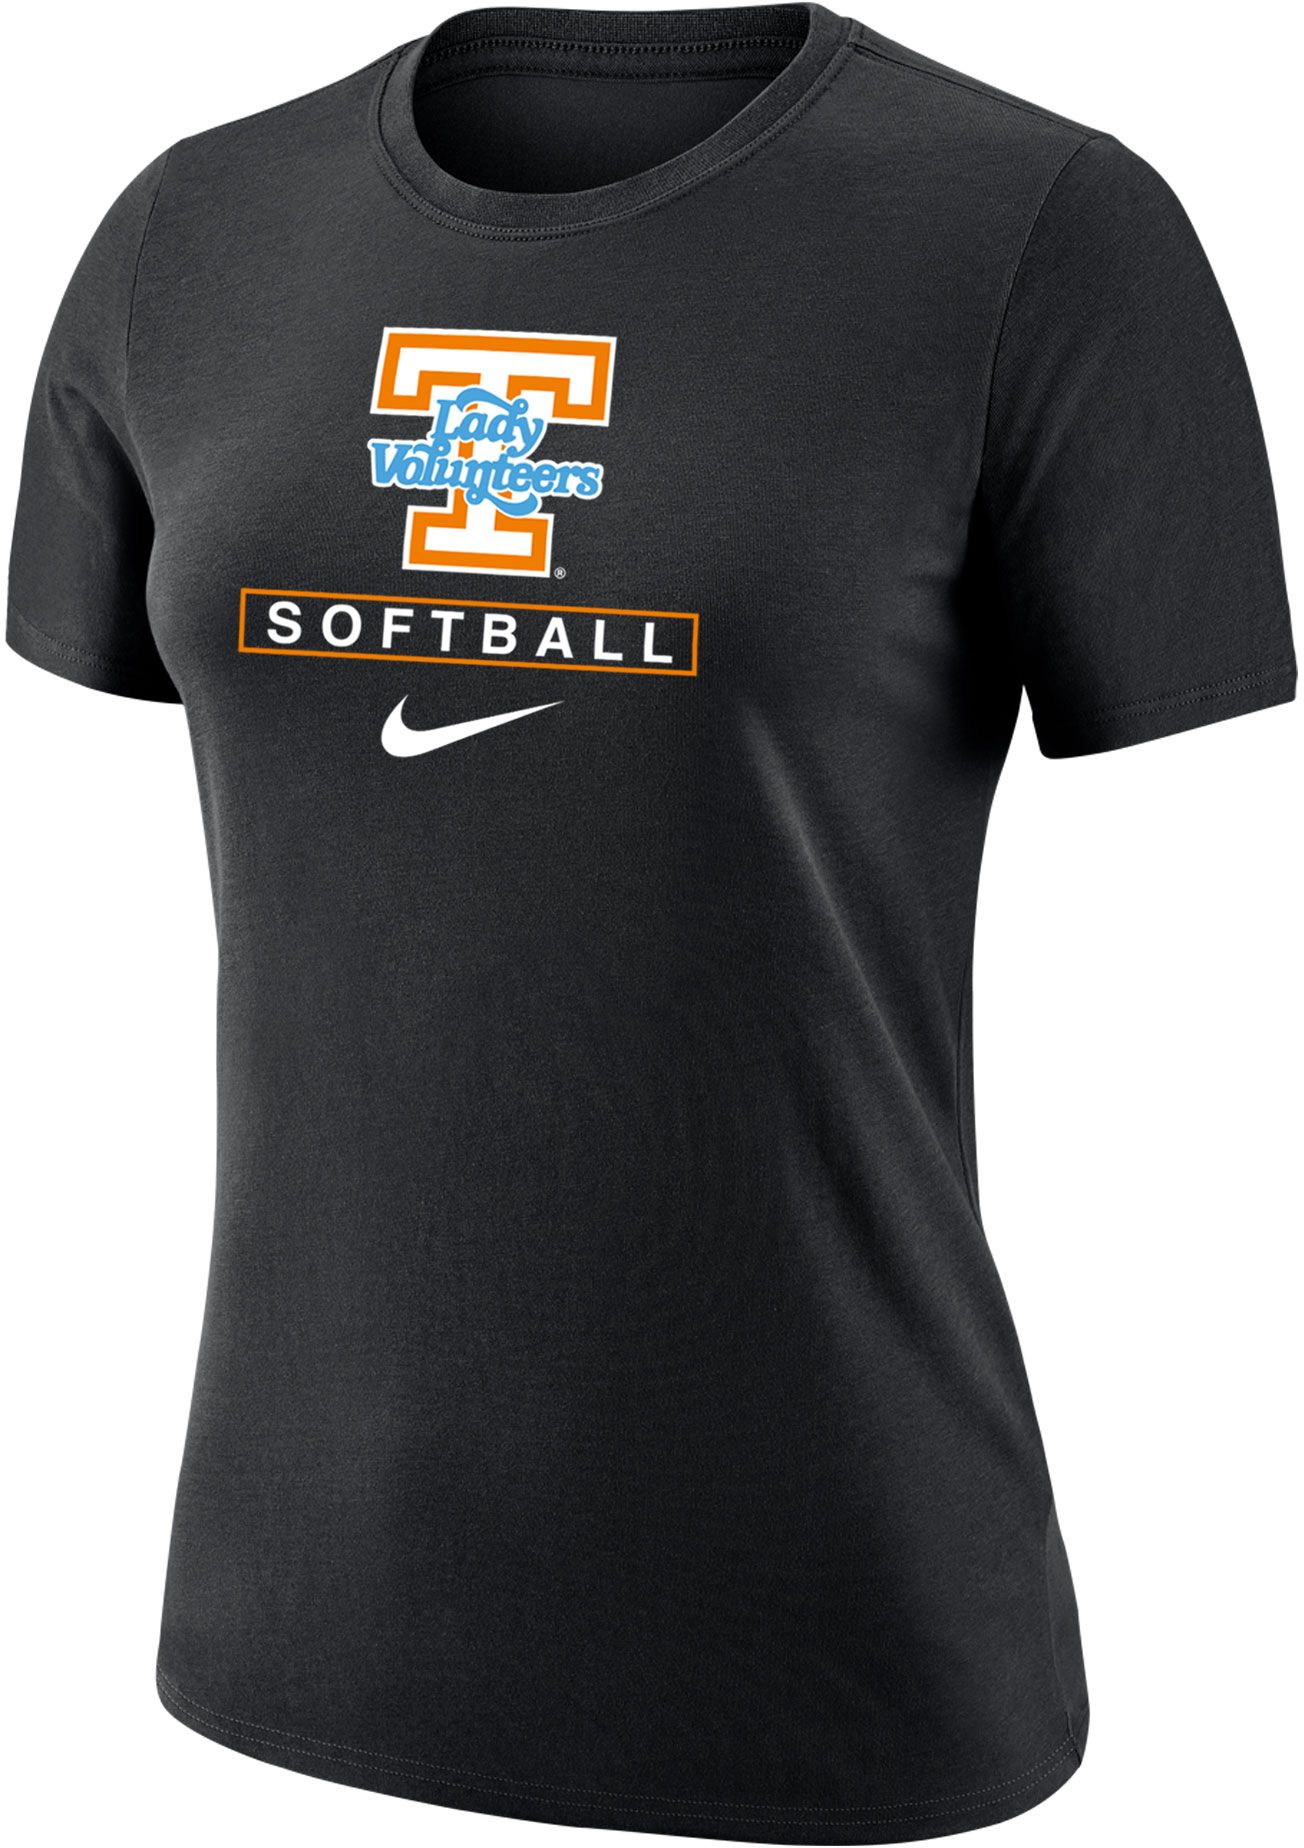 Tennessee Volunteers softball legends jersey